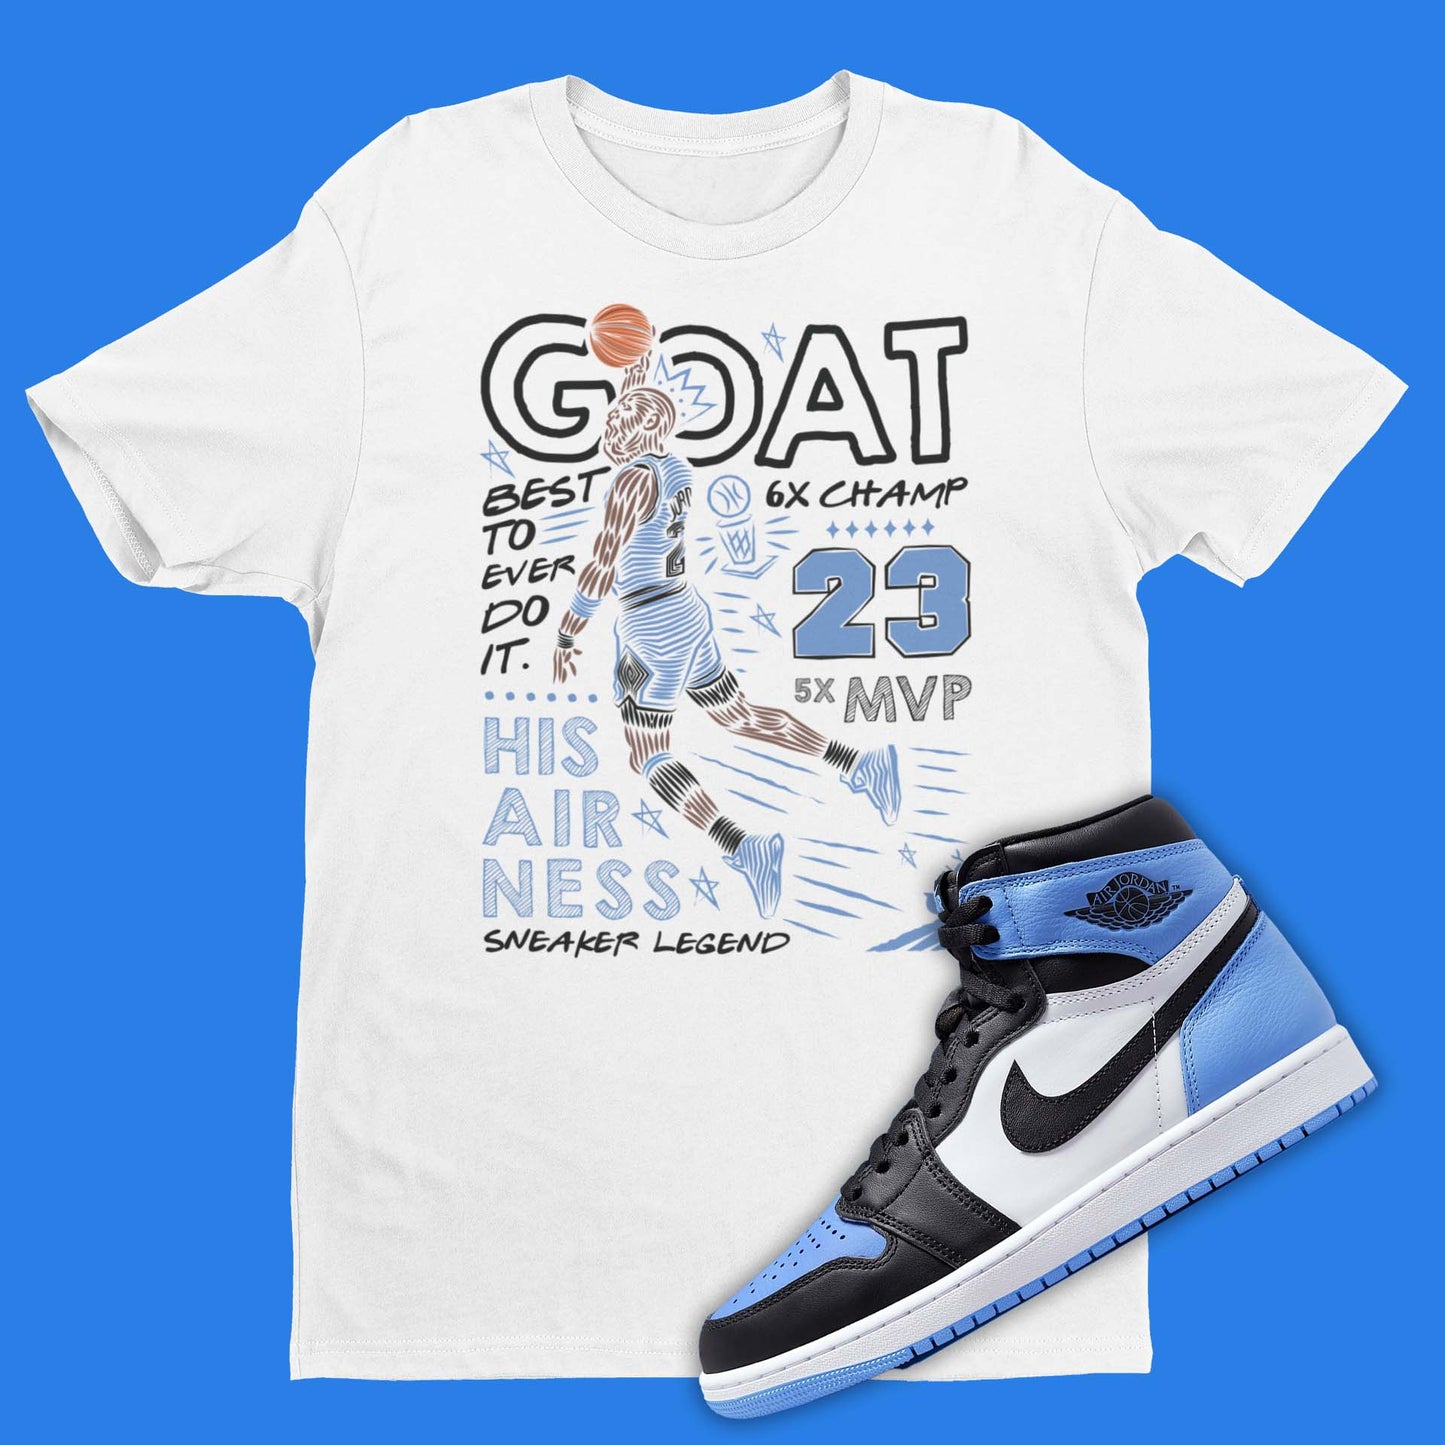 GOAT Shirt Matching Air Jordan 1 Retro High OG UNC Toe with Michael Jordan dunking on the front